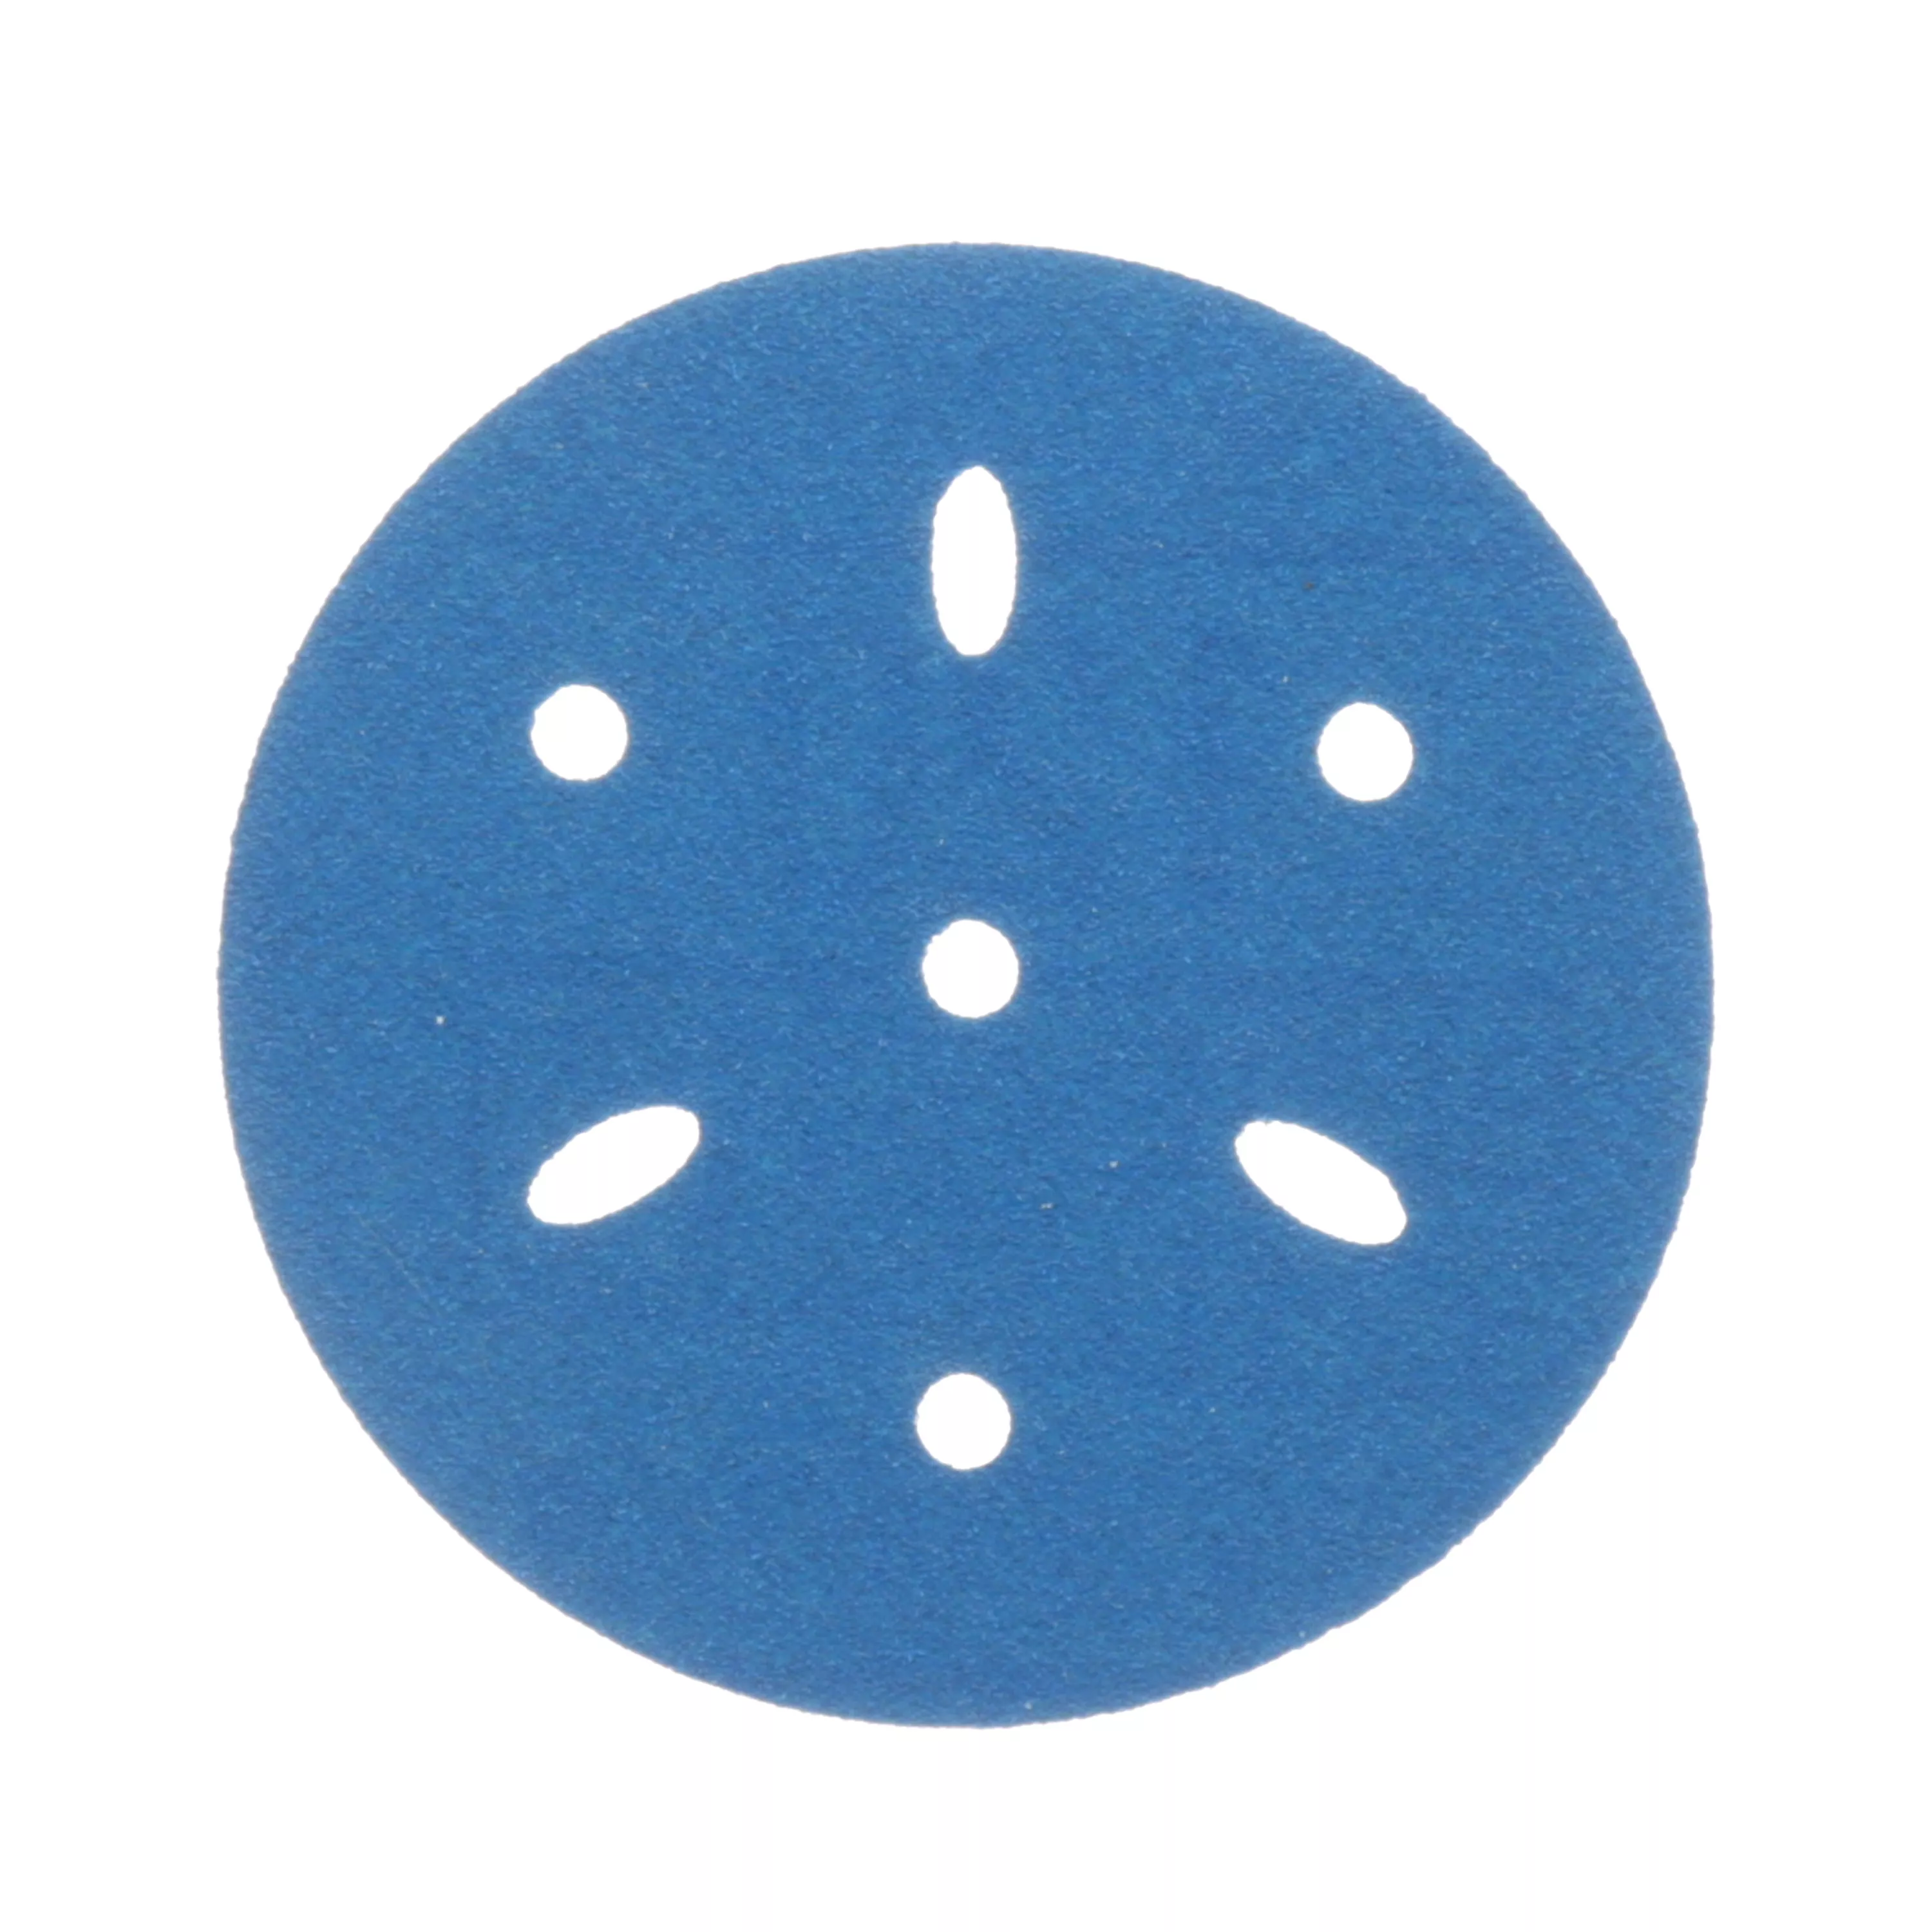 SKU 7100091342 | 3M™ Hookit™ Blue Abrasive Disc Multi-hole